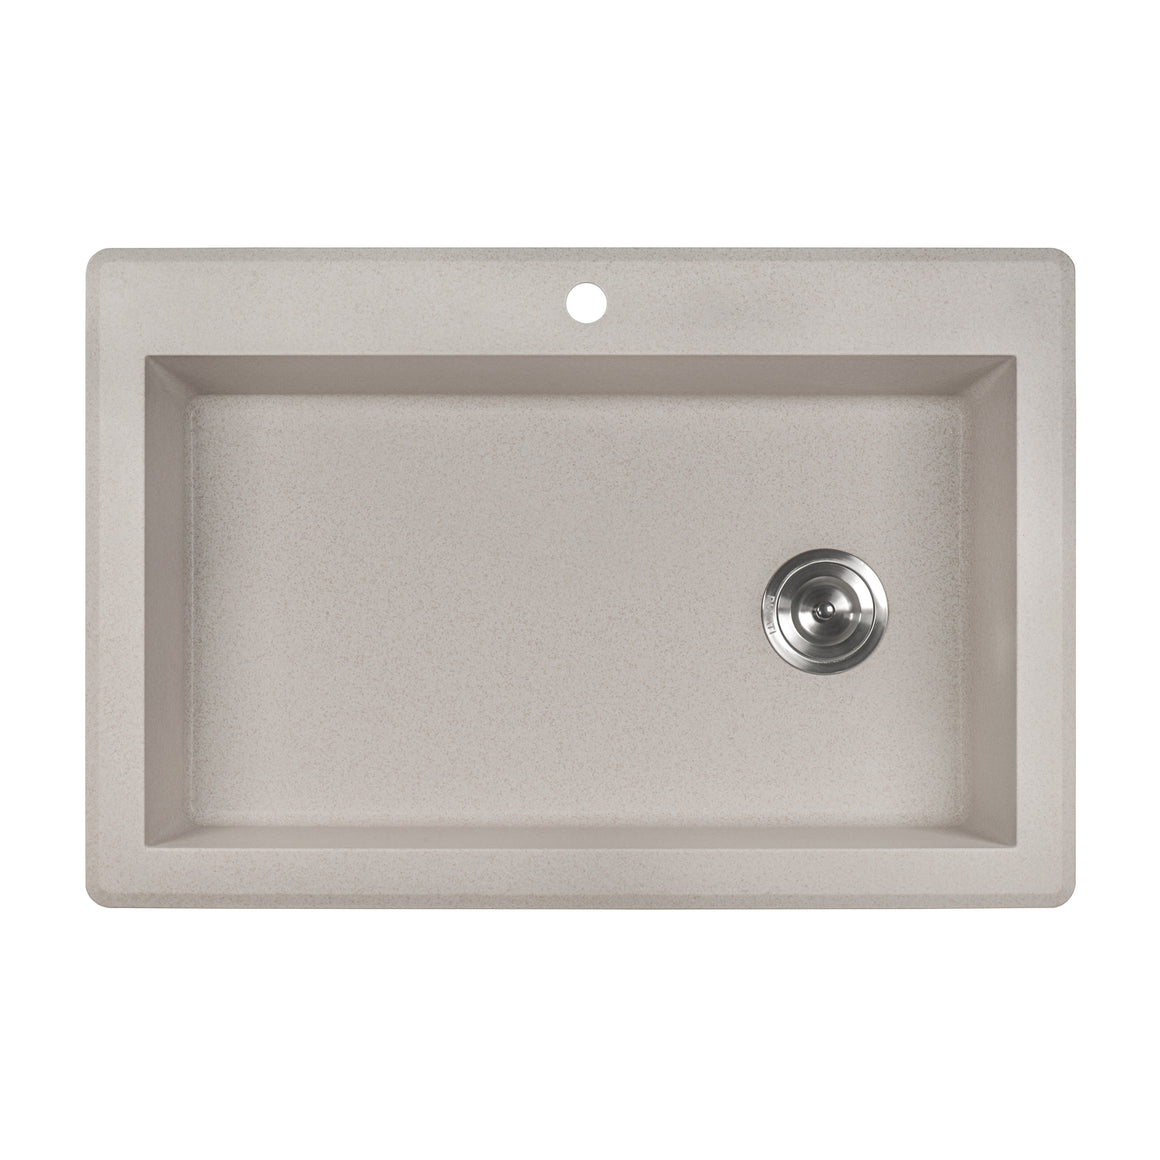 Ruvati 33 x 22 inch epiGranite Dual-Mount Granite Composite Single Bowl Kitchen Sink - Caribbean Sand - RVG1033CS